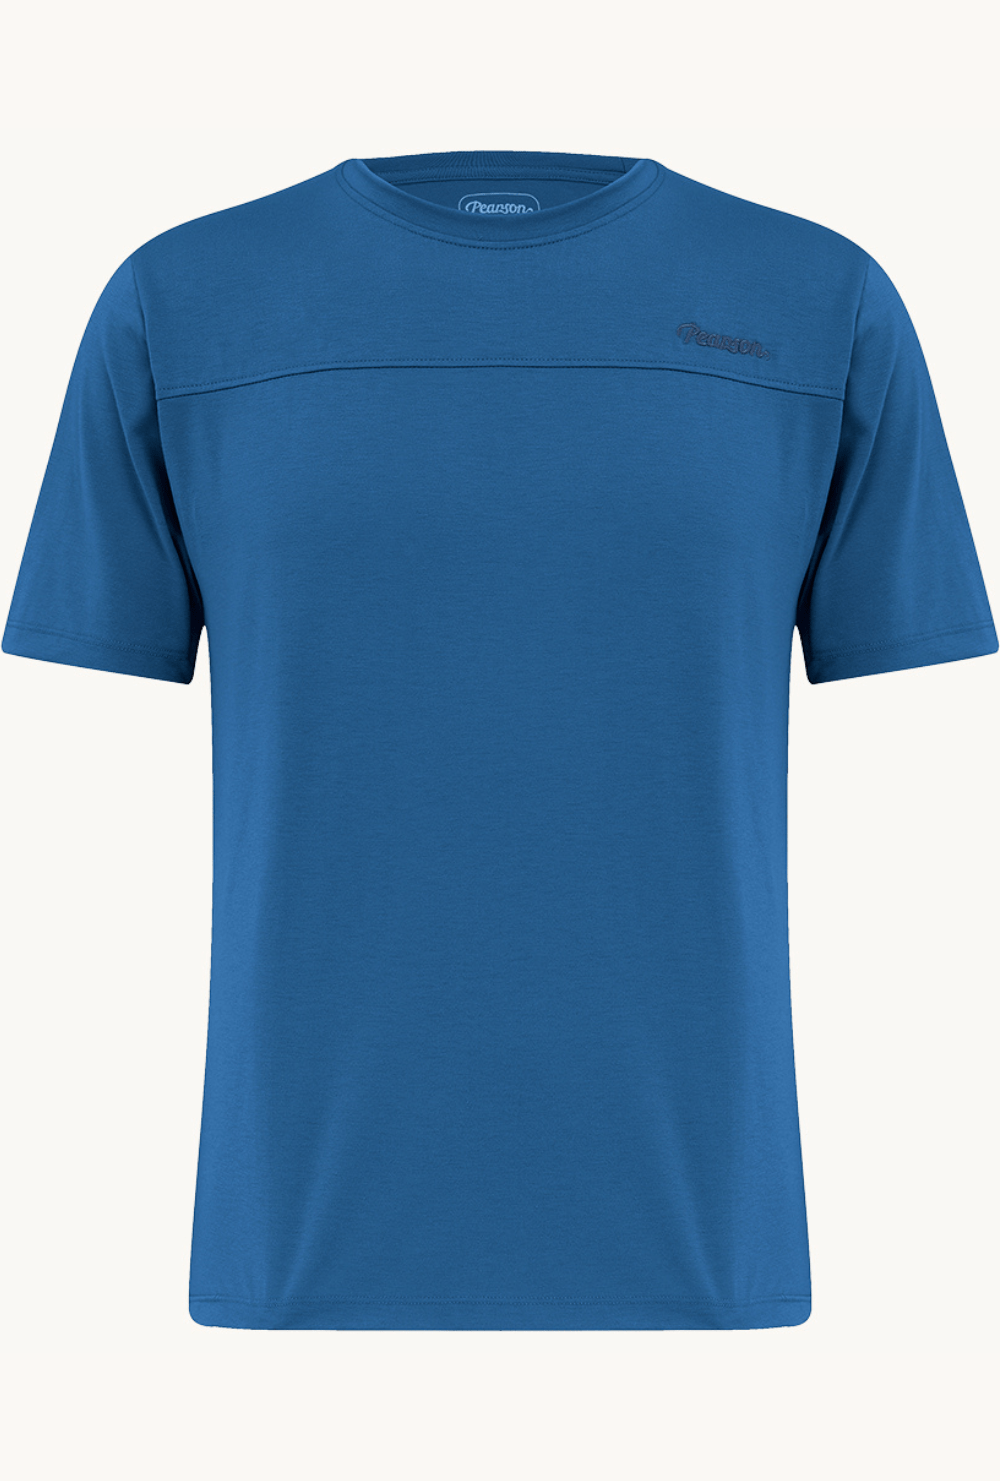 Pearson 1860  High DaysandHolidays - Cycling T-shirt Mid Blue  Mid Blue / Medium